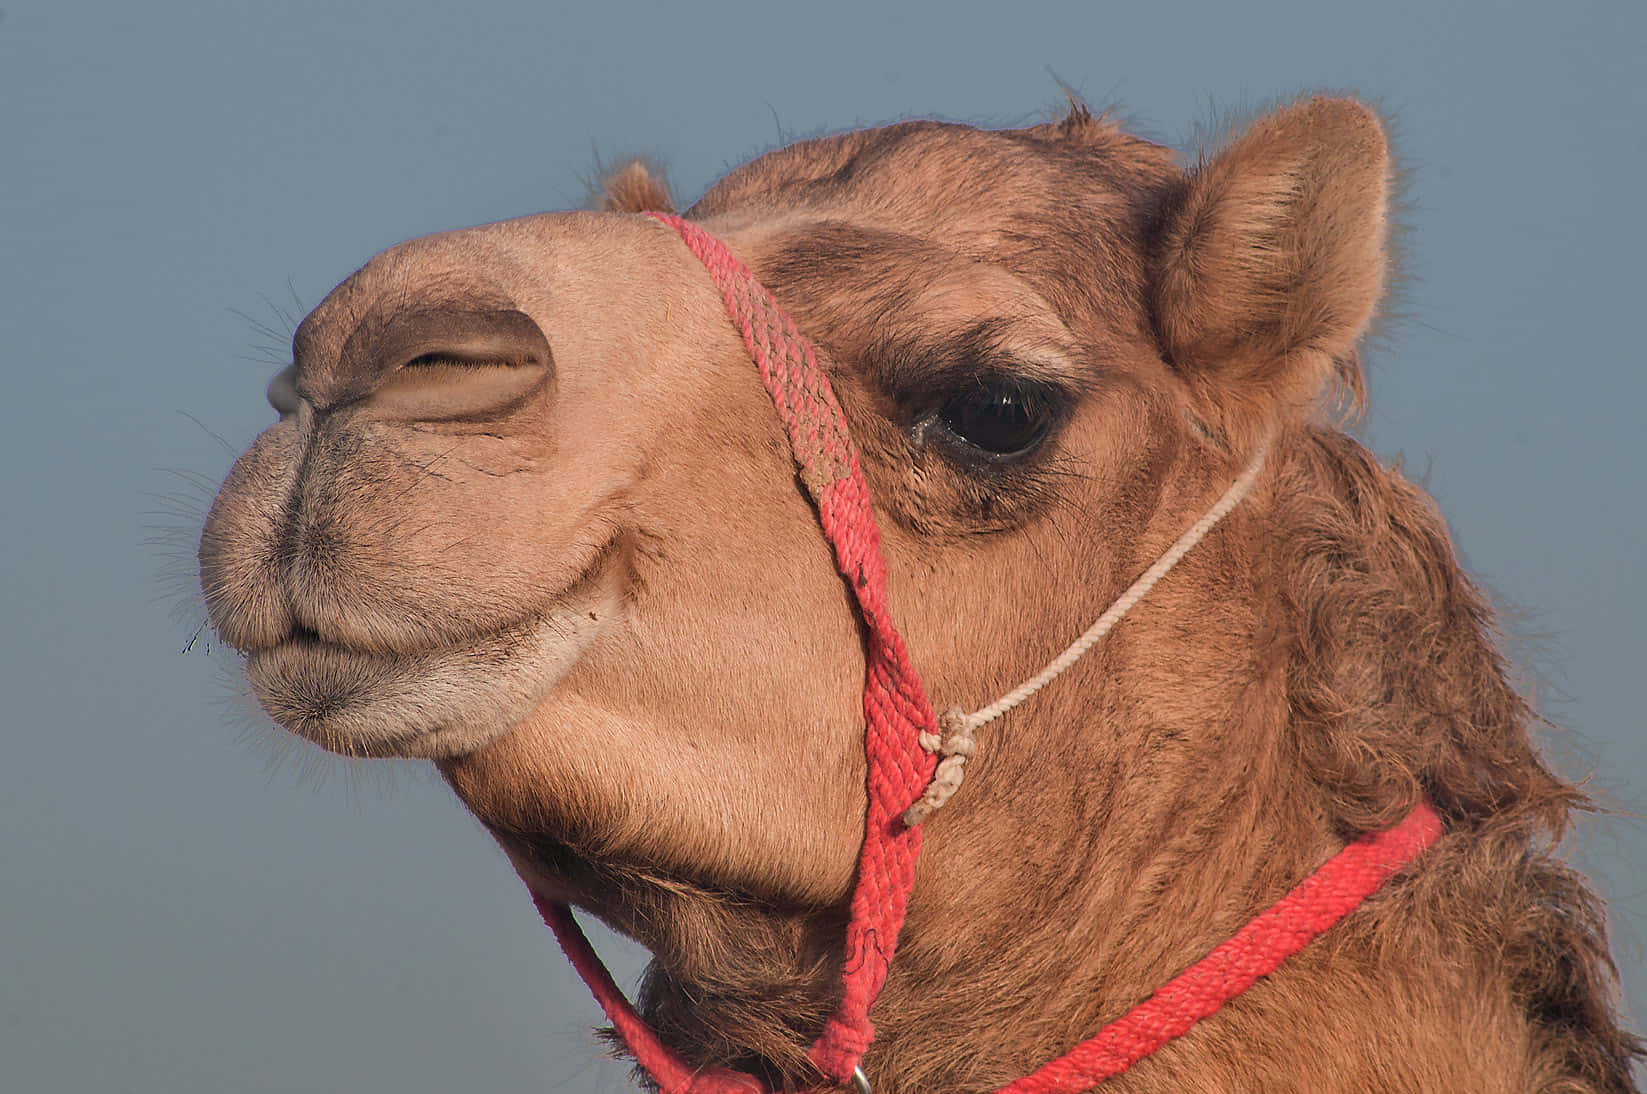 A Camel Wanders Across the Dry Desert Landscape